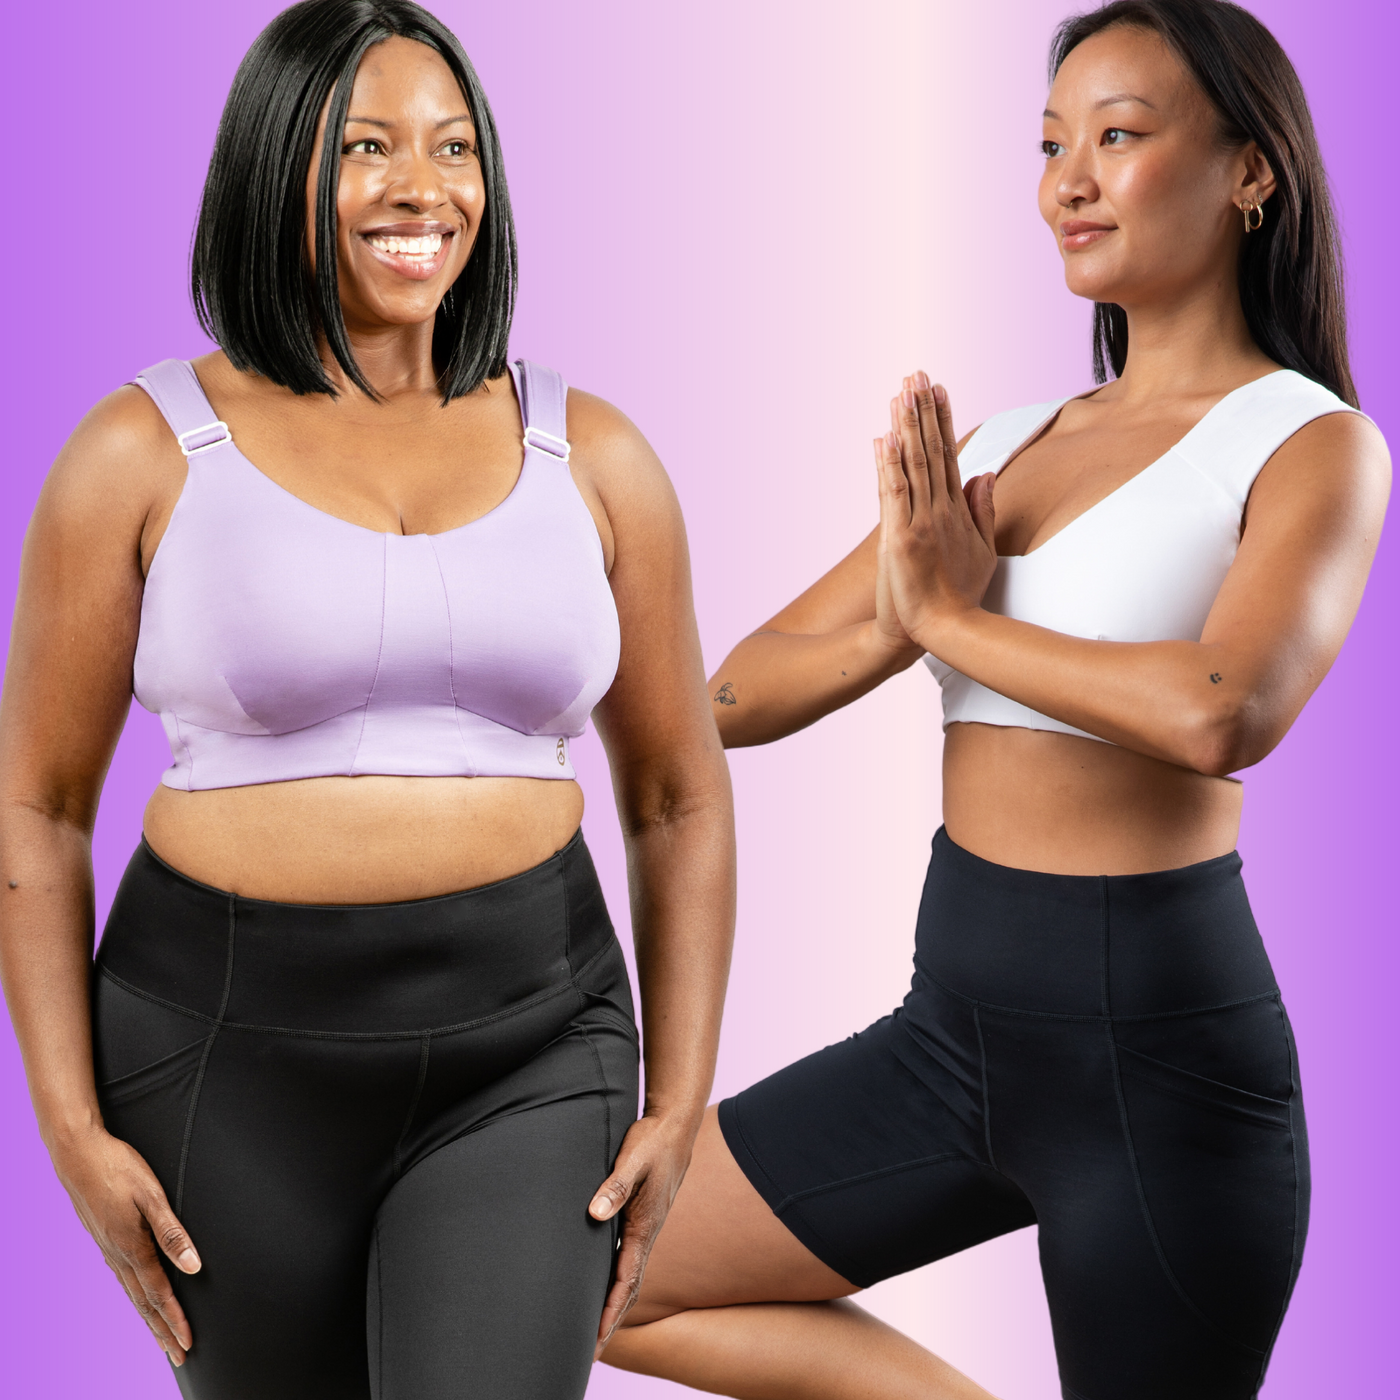 Kinflyte''s posture bra is a posture sports bra. This posture correcting sports bra for shoulder support, back support, targeted compression